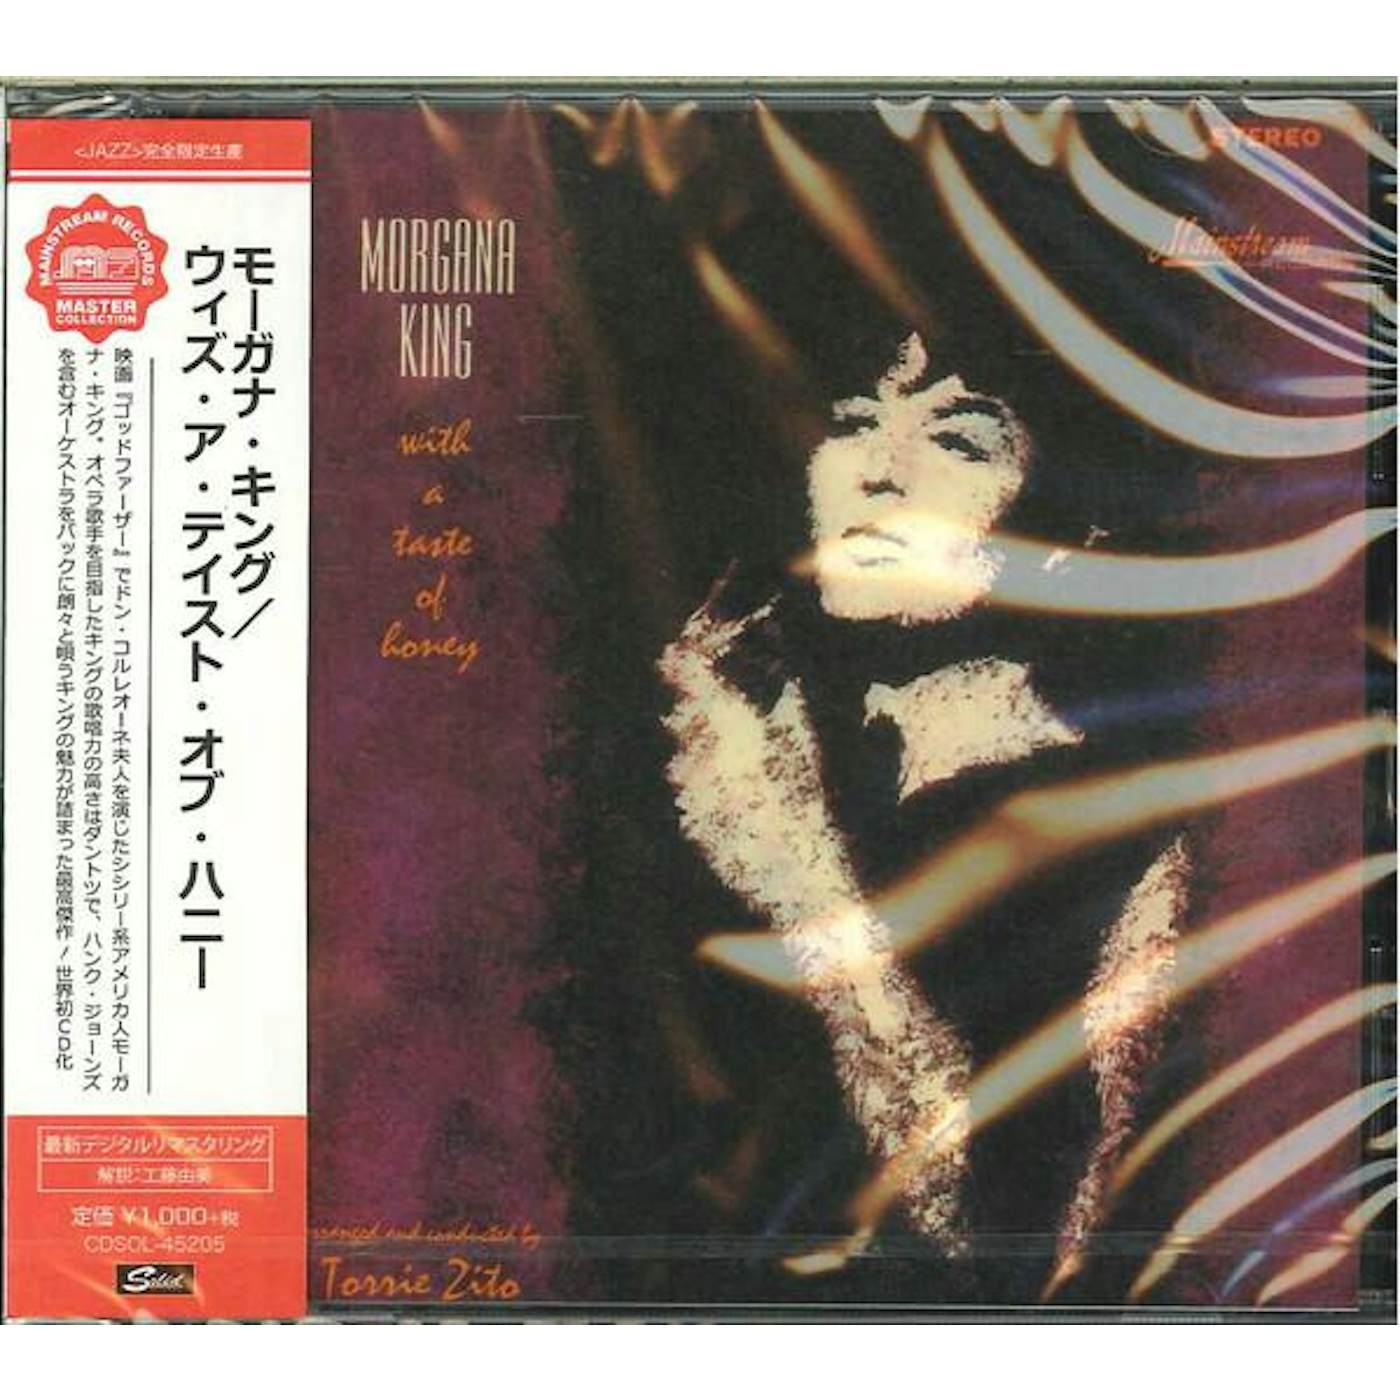 Morgana King WITH TASTE OF HONEY (REMASTER) CD